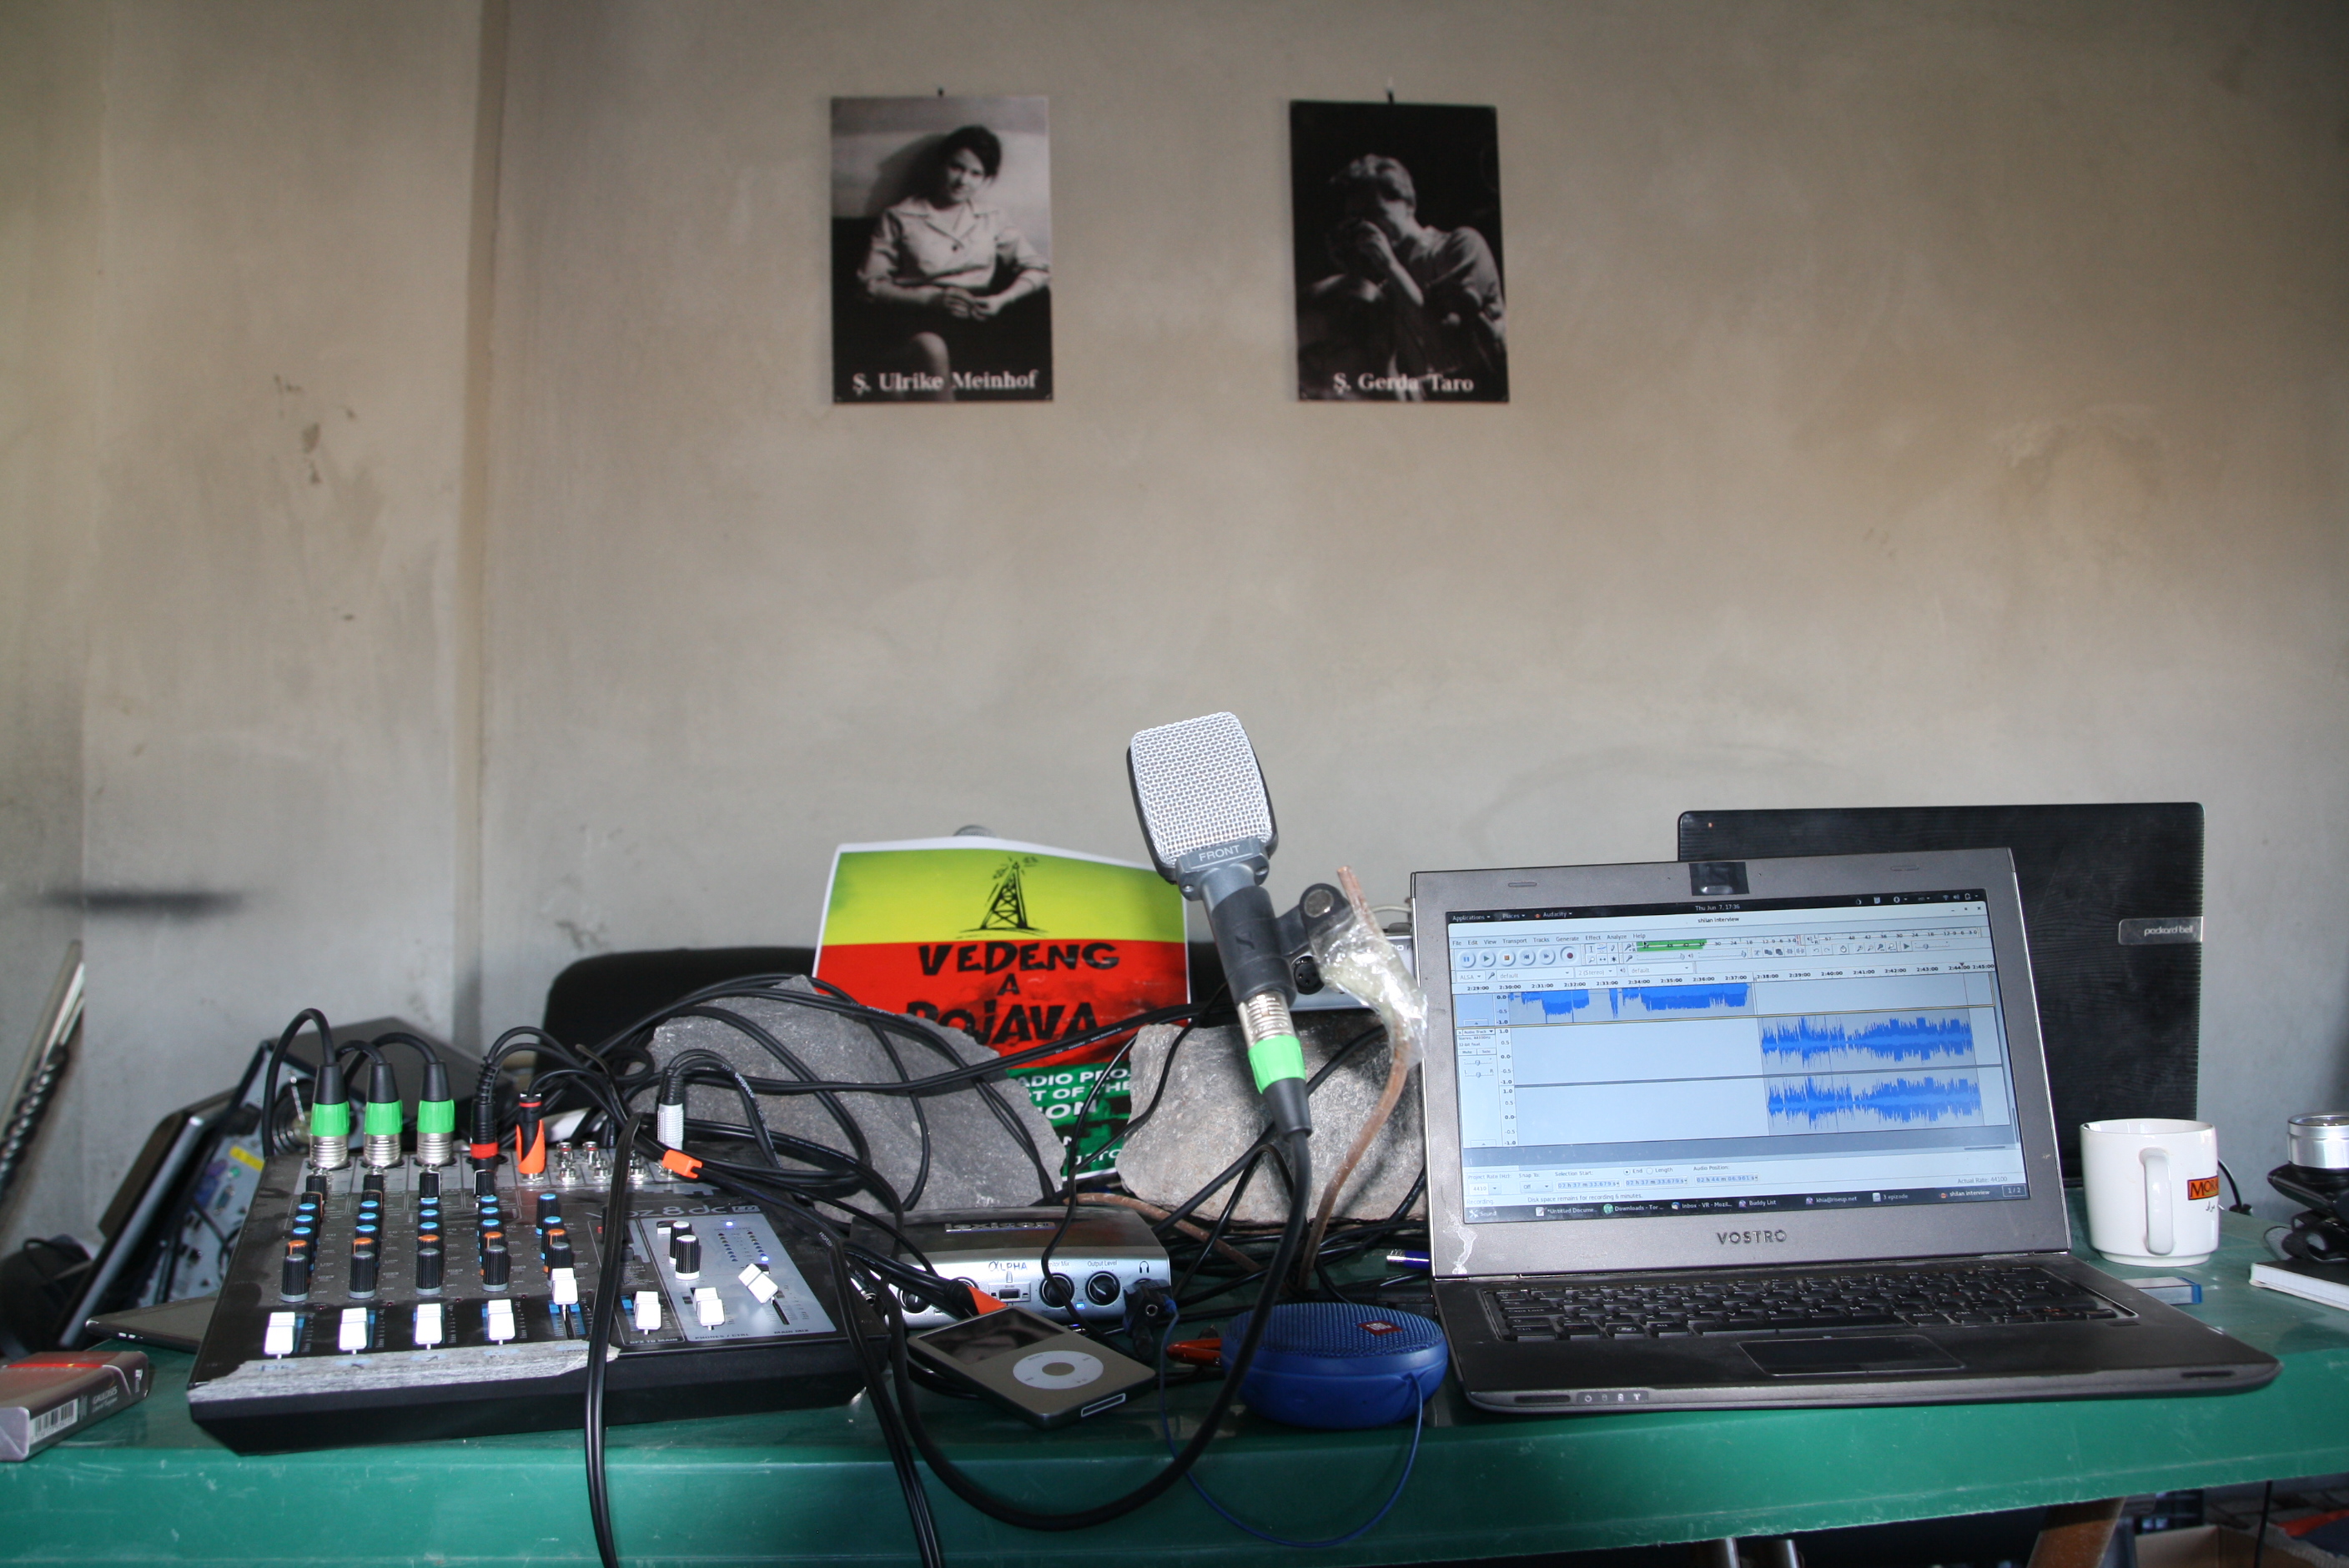 Vedenga Rojava, 4th program of the internationalist radio project